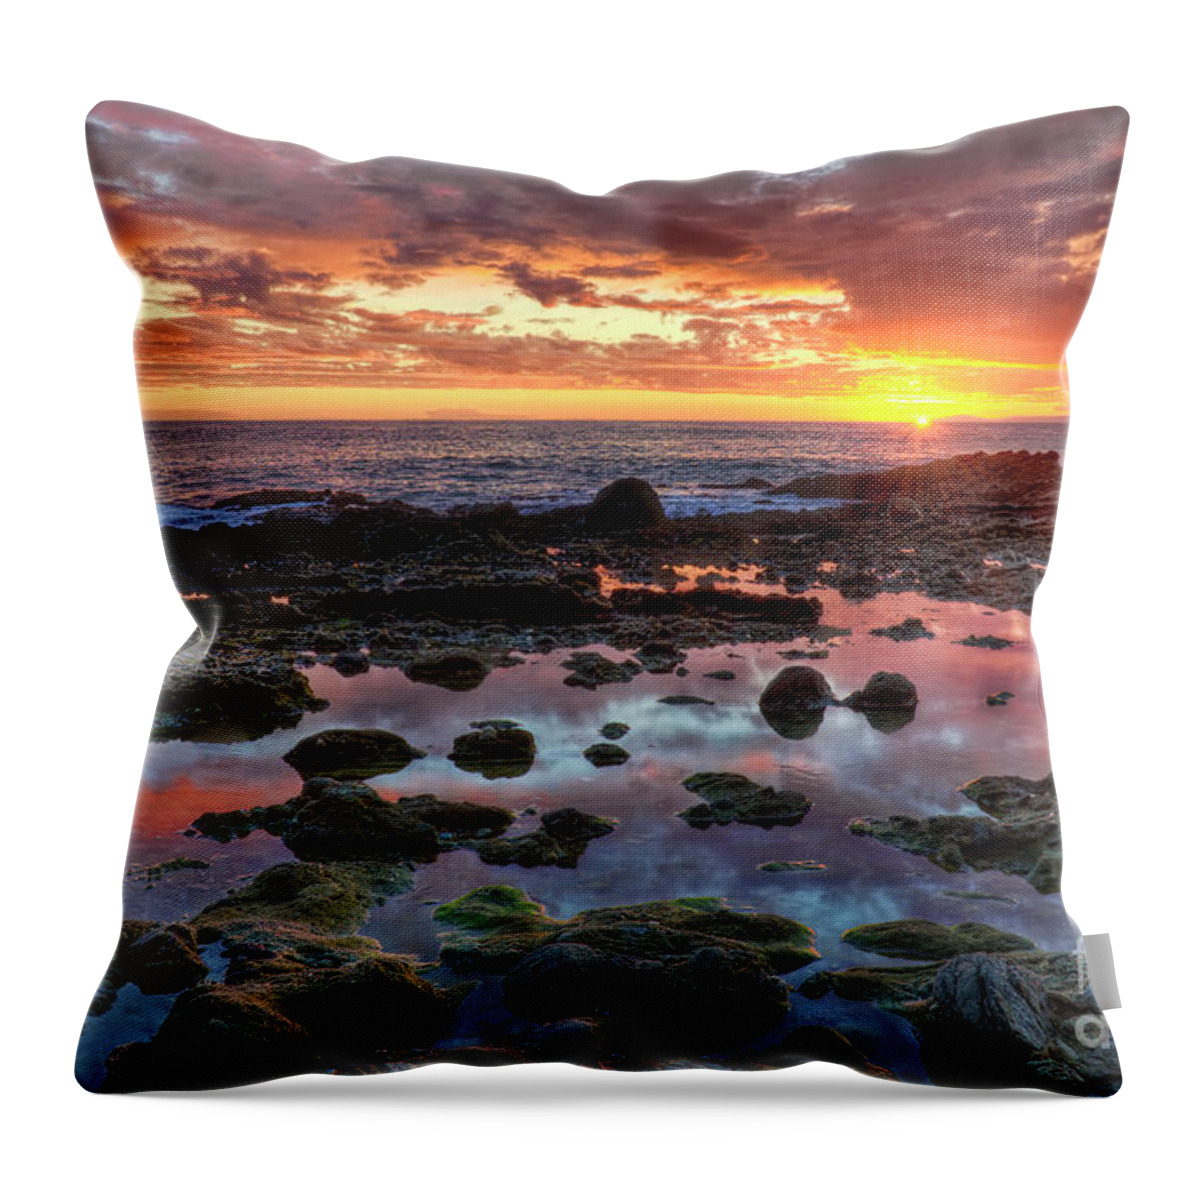 Laguna Throw Pillow featuring the photograph Laguna Beach Tidepools at Sunset by Eddie Yerkish